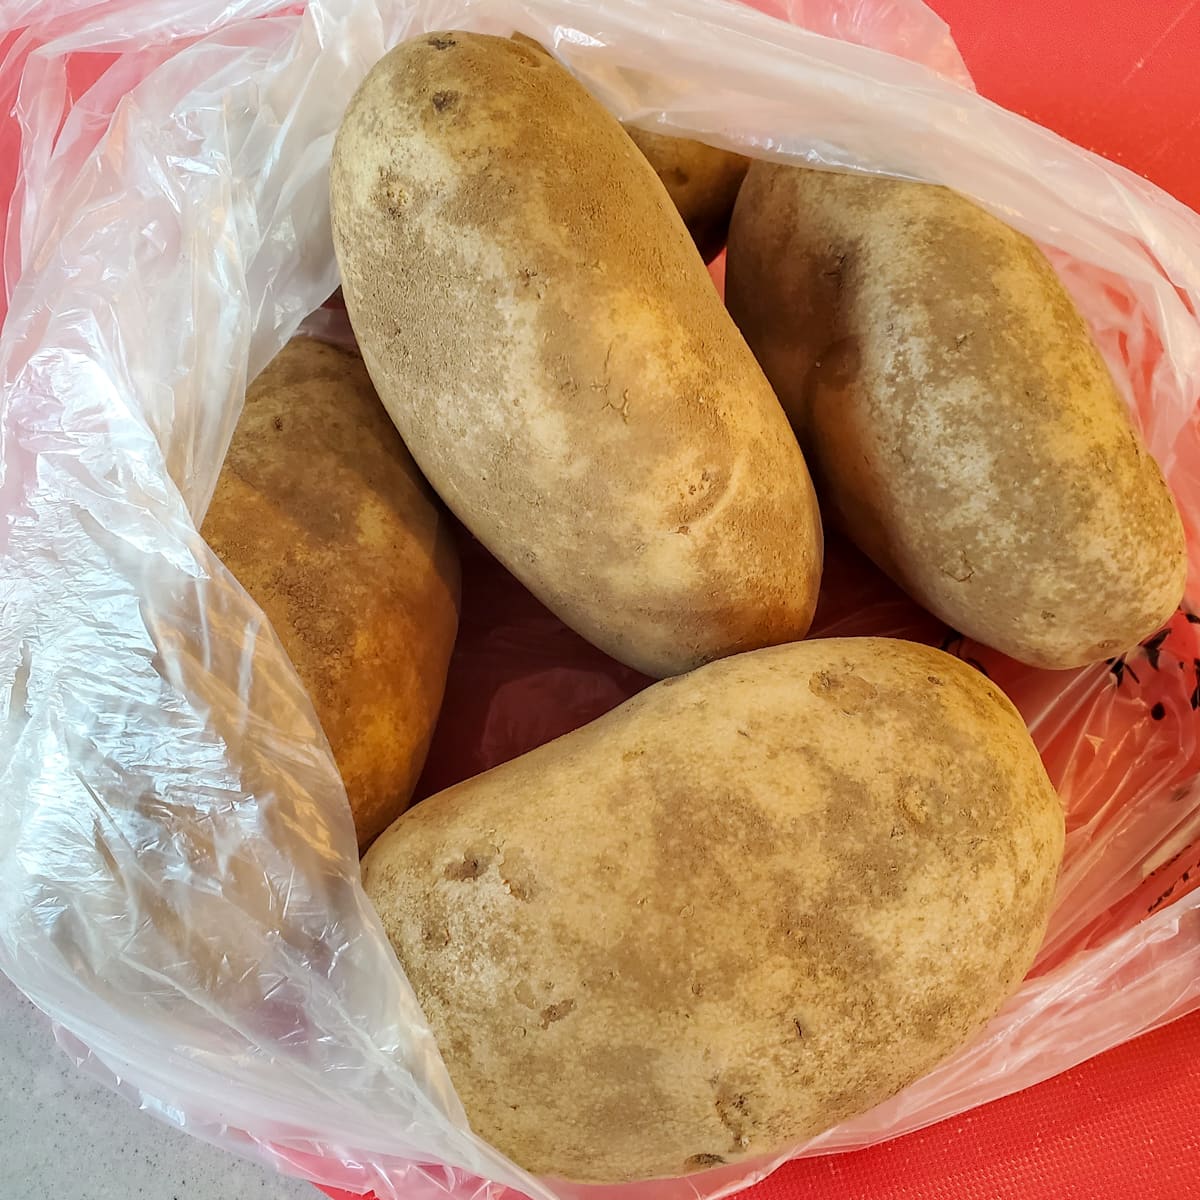 Bag of Russet potatoes.